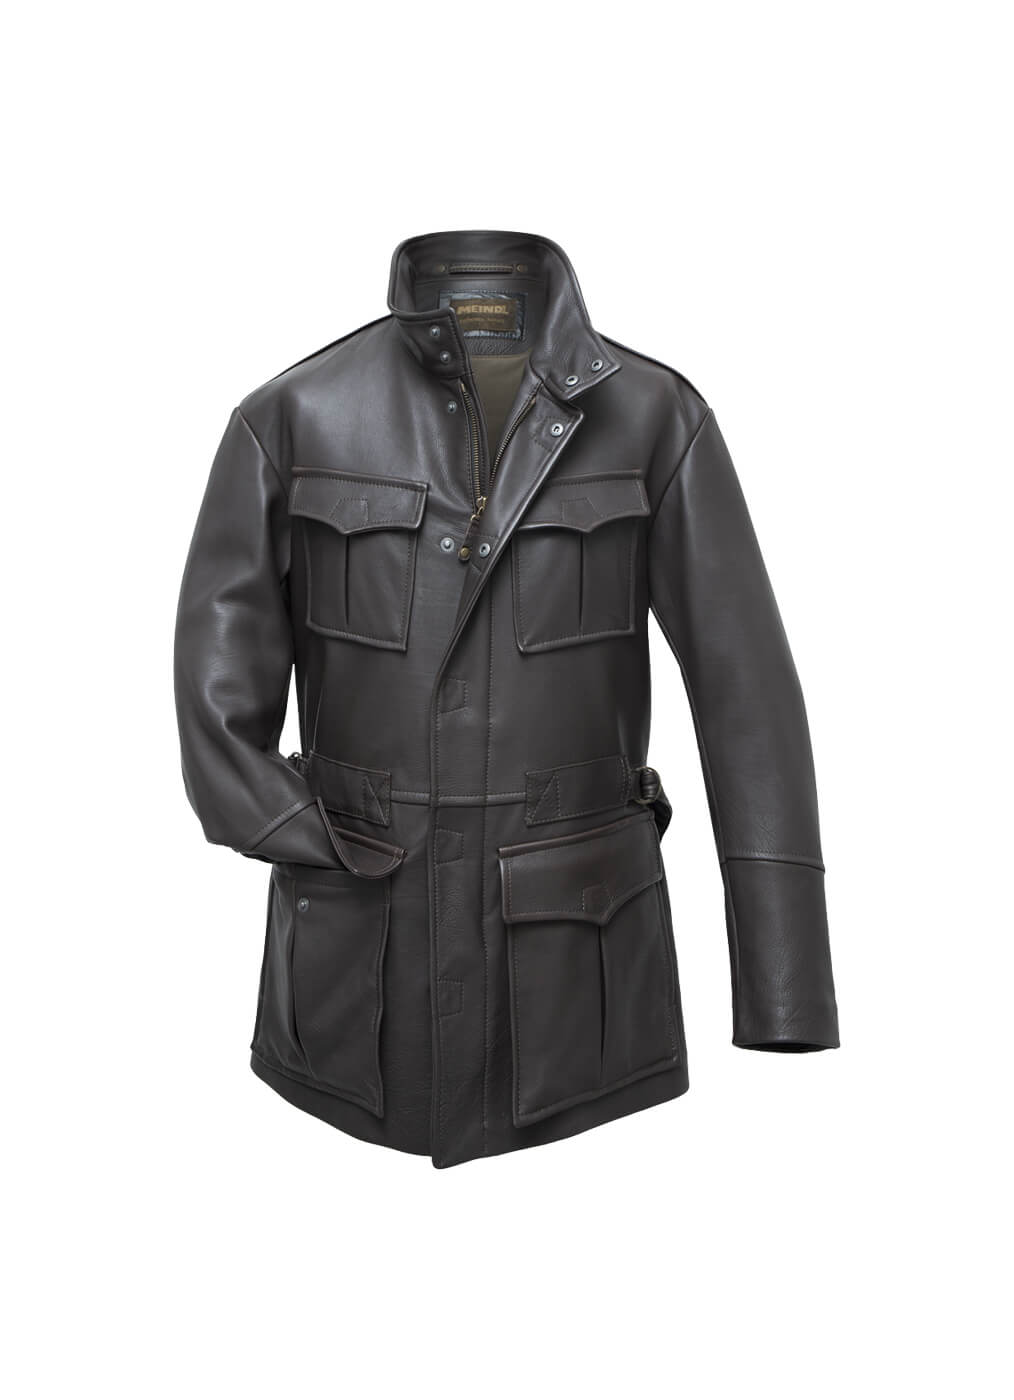 Nappa Leather Jacket Men “Cruz”, mocca